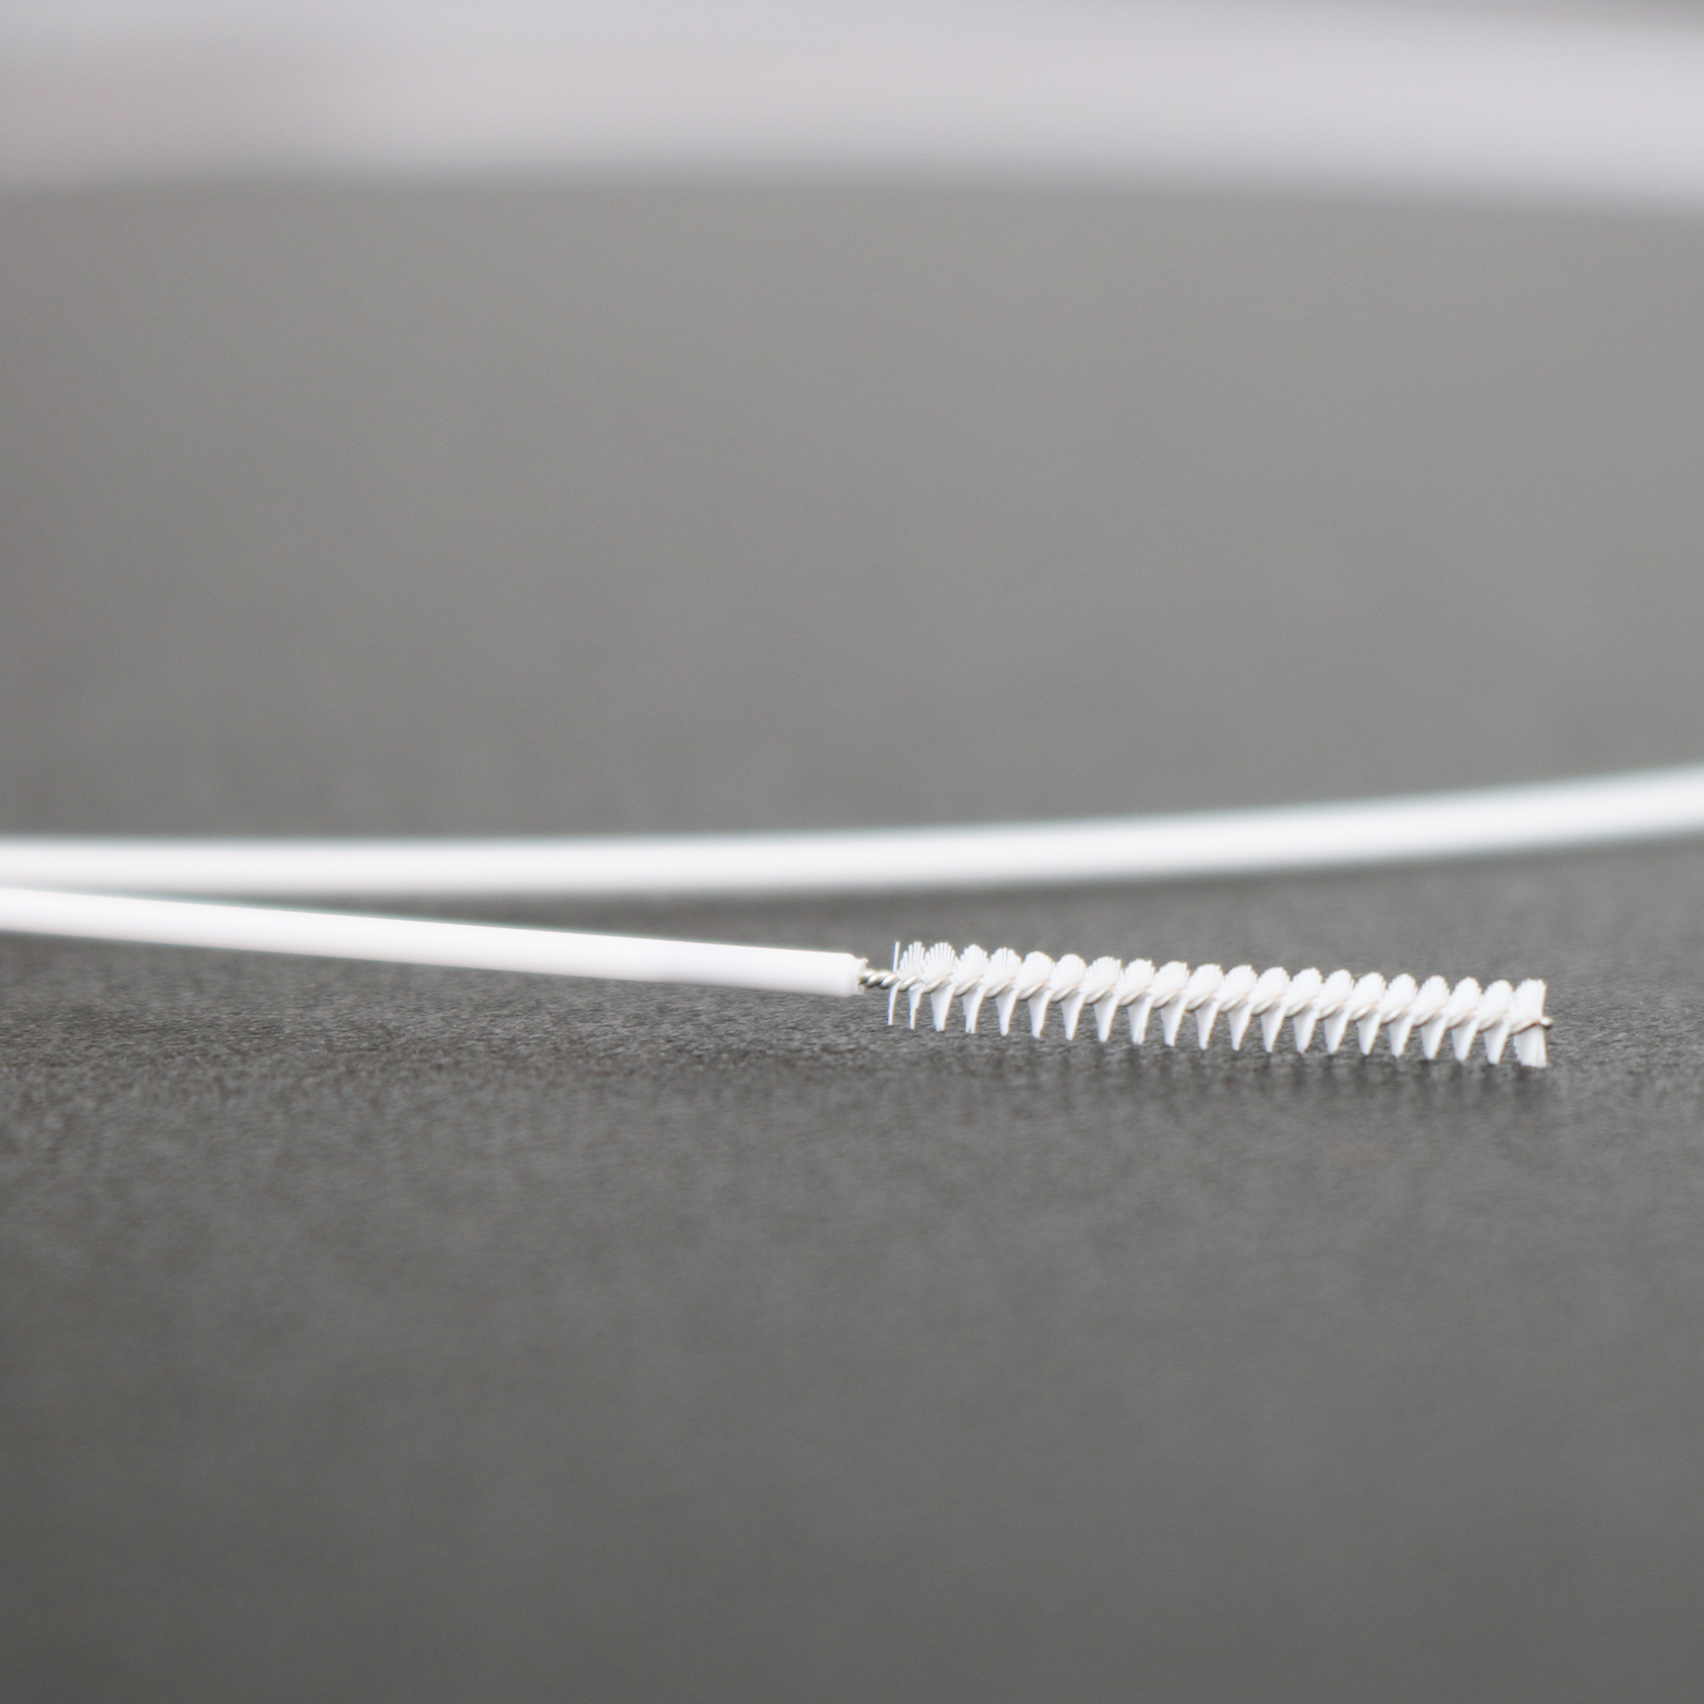 Straw Cleaning Brush - White Nylon with Straight Tip - 6L - 1/4 Diameter